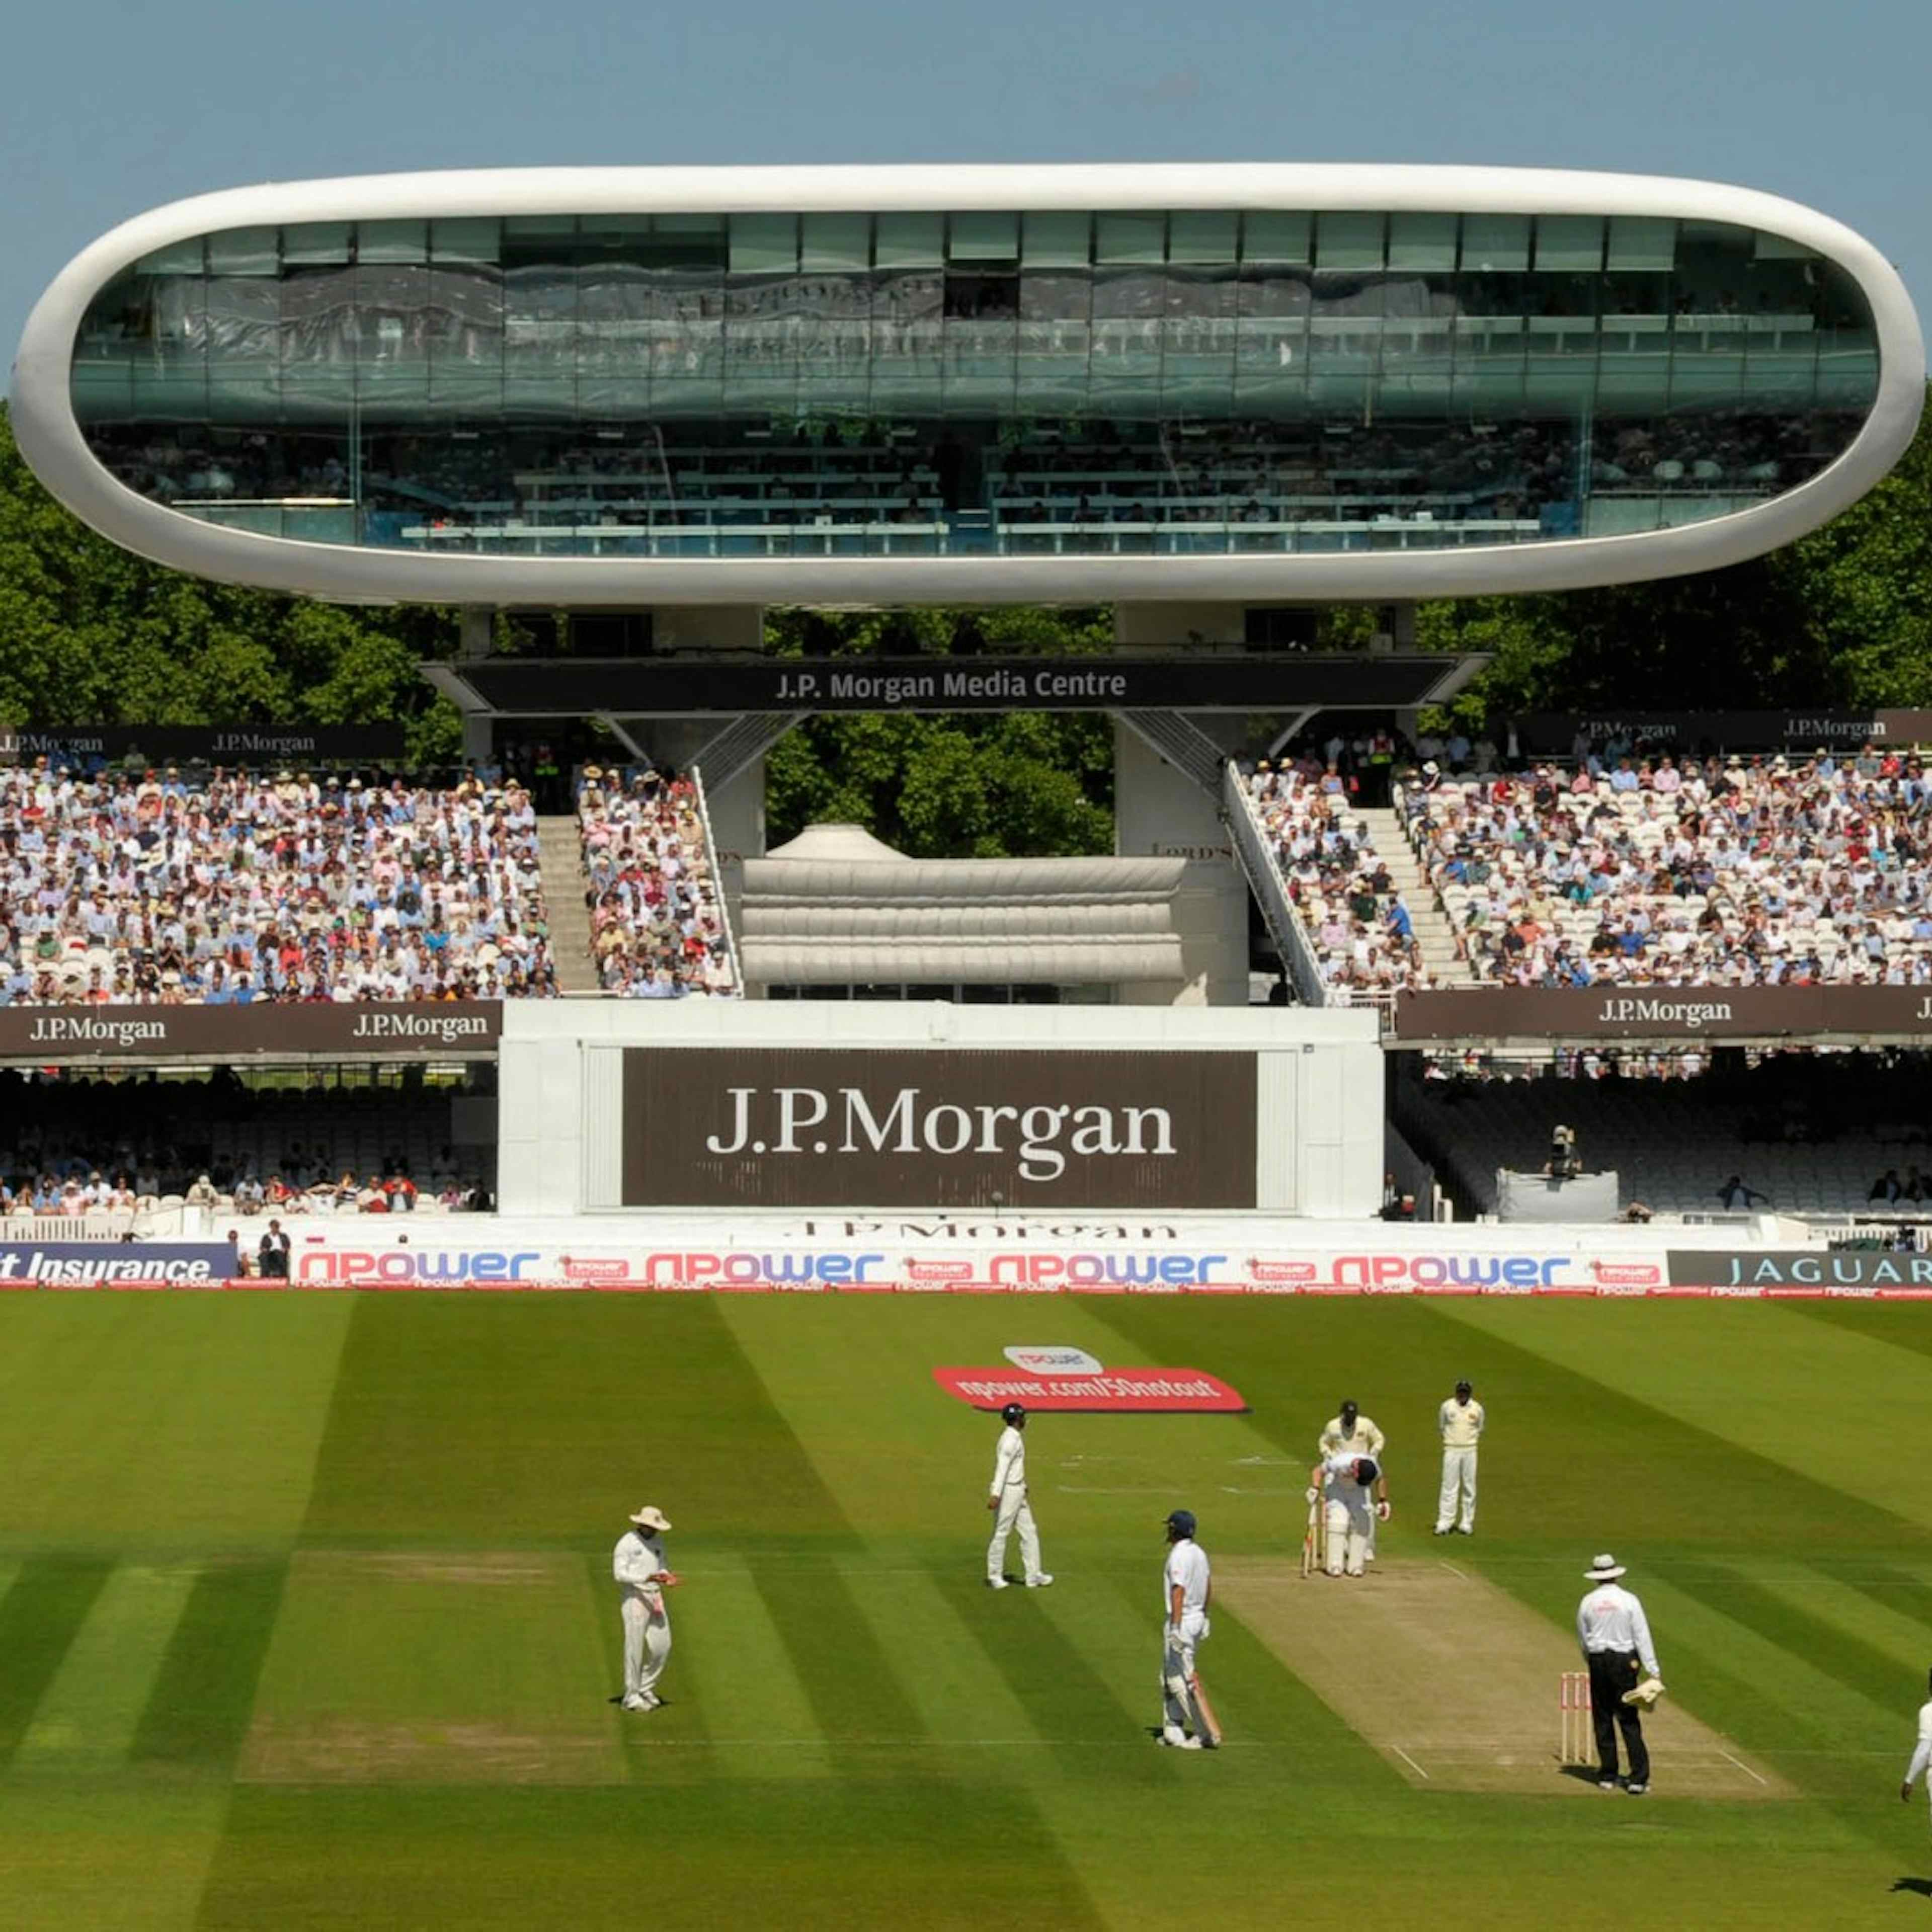 Lord's Cricket Ground - J.P. Morgan Media Centre image 3